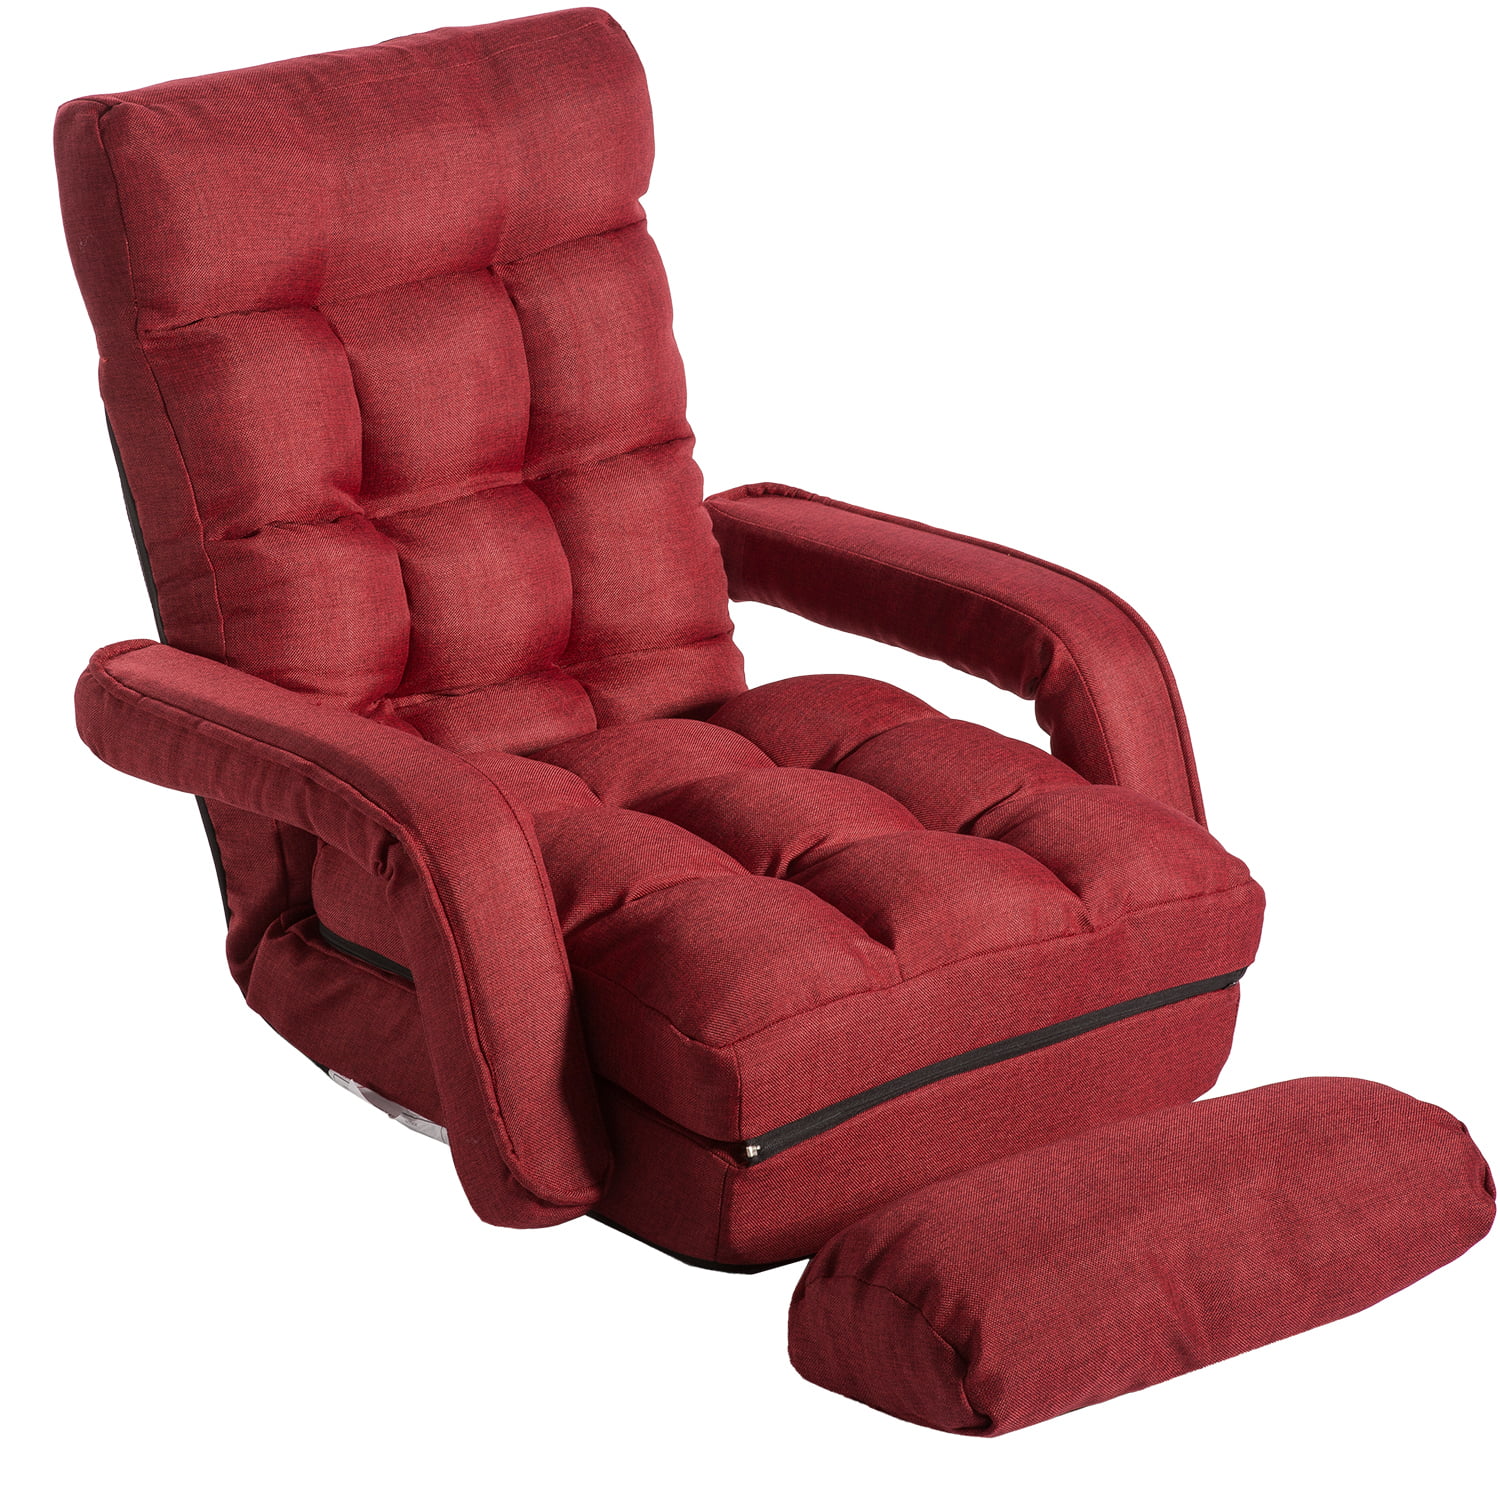 Tkoofn Folding Lazy Sofa  Lounger Bed Floor  Chair  Sofa  with 